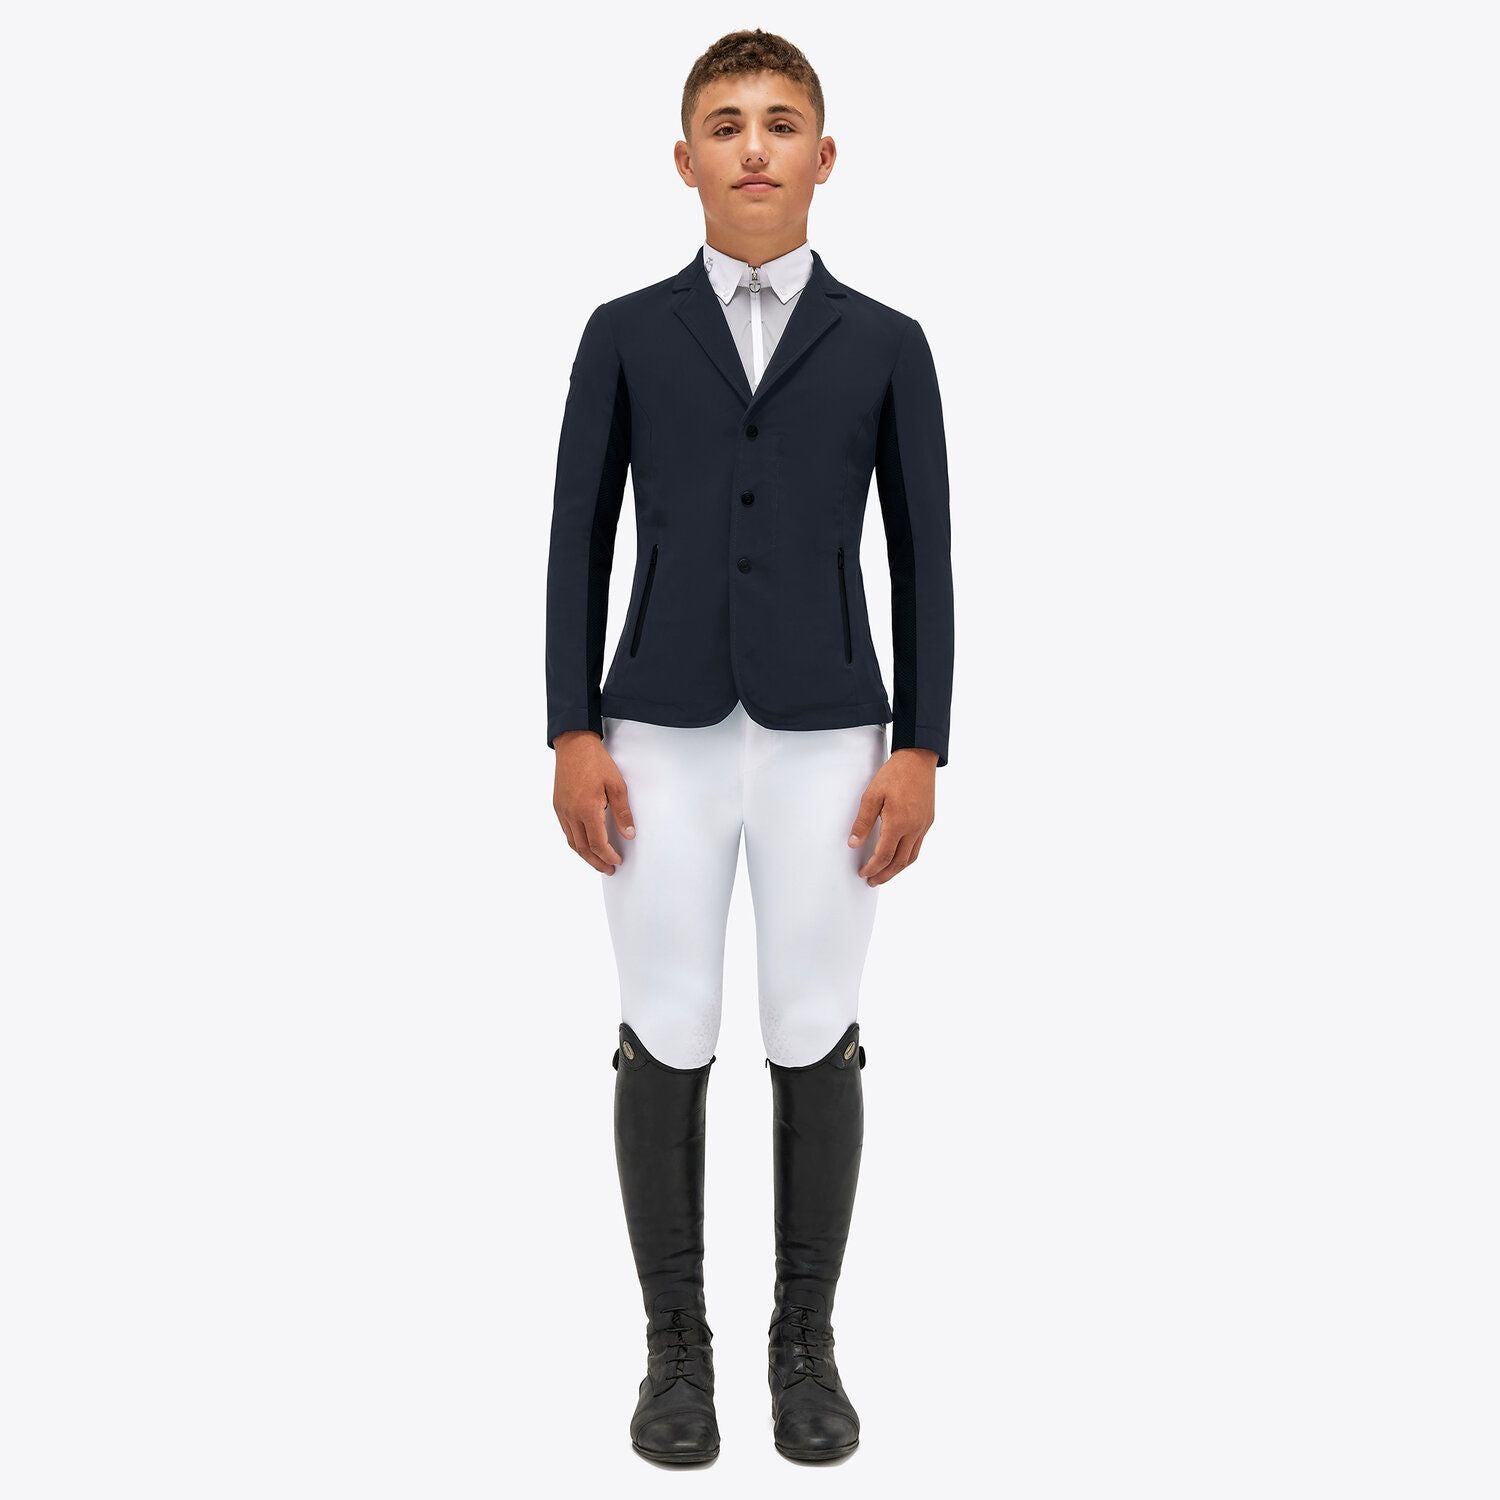 Cavalleria Toscana Boys Jacket - Age 12